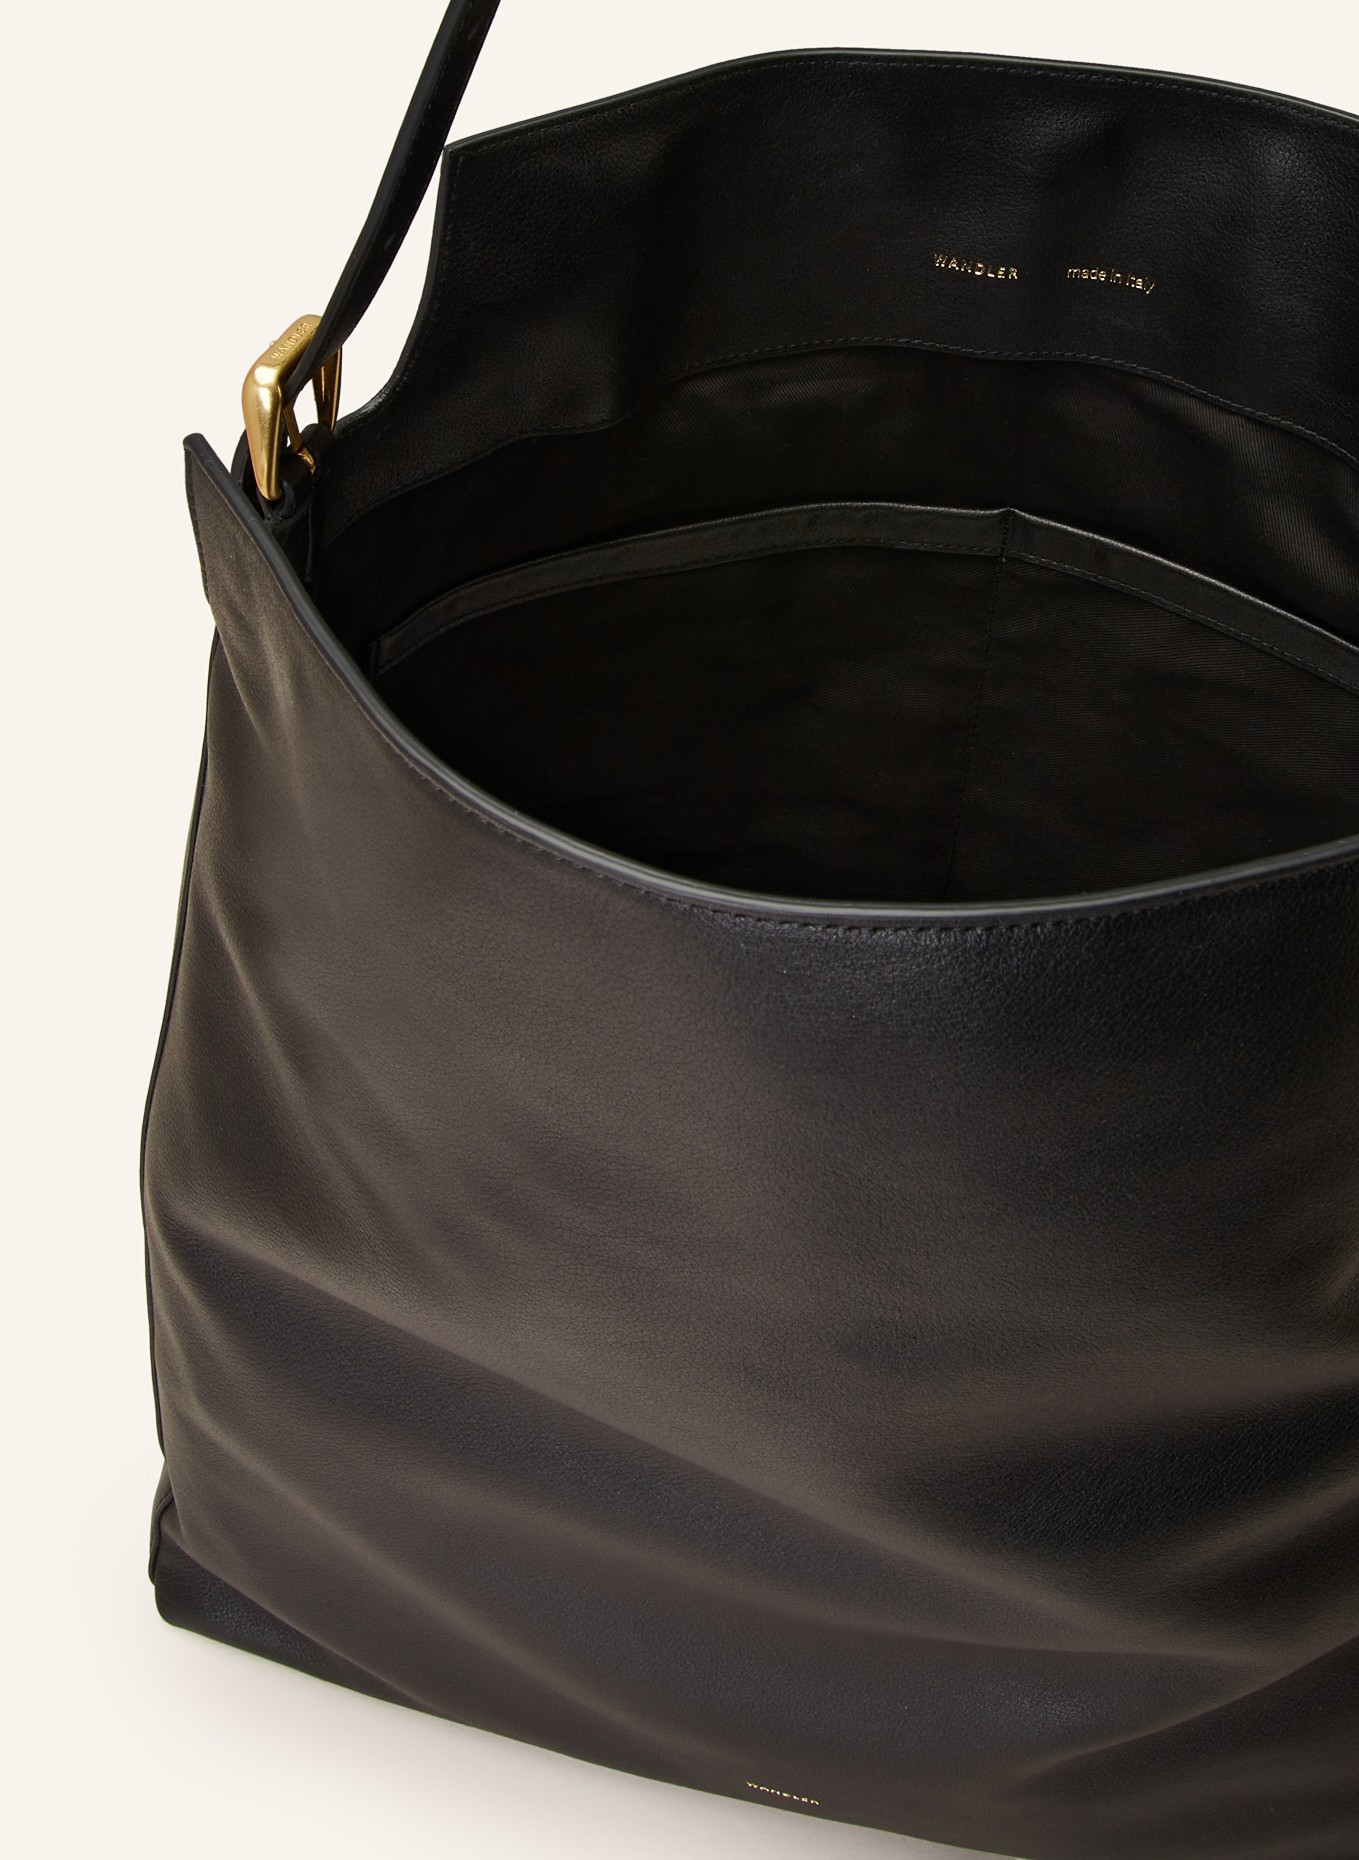 WANDLER Handbag MARLI, Color: BLACK (Image 3)